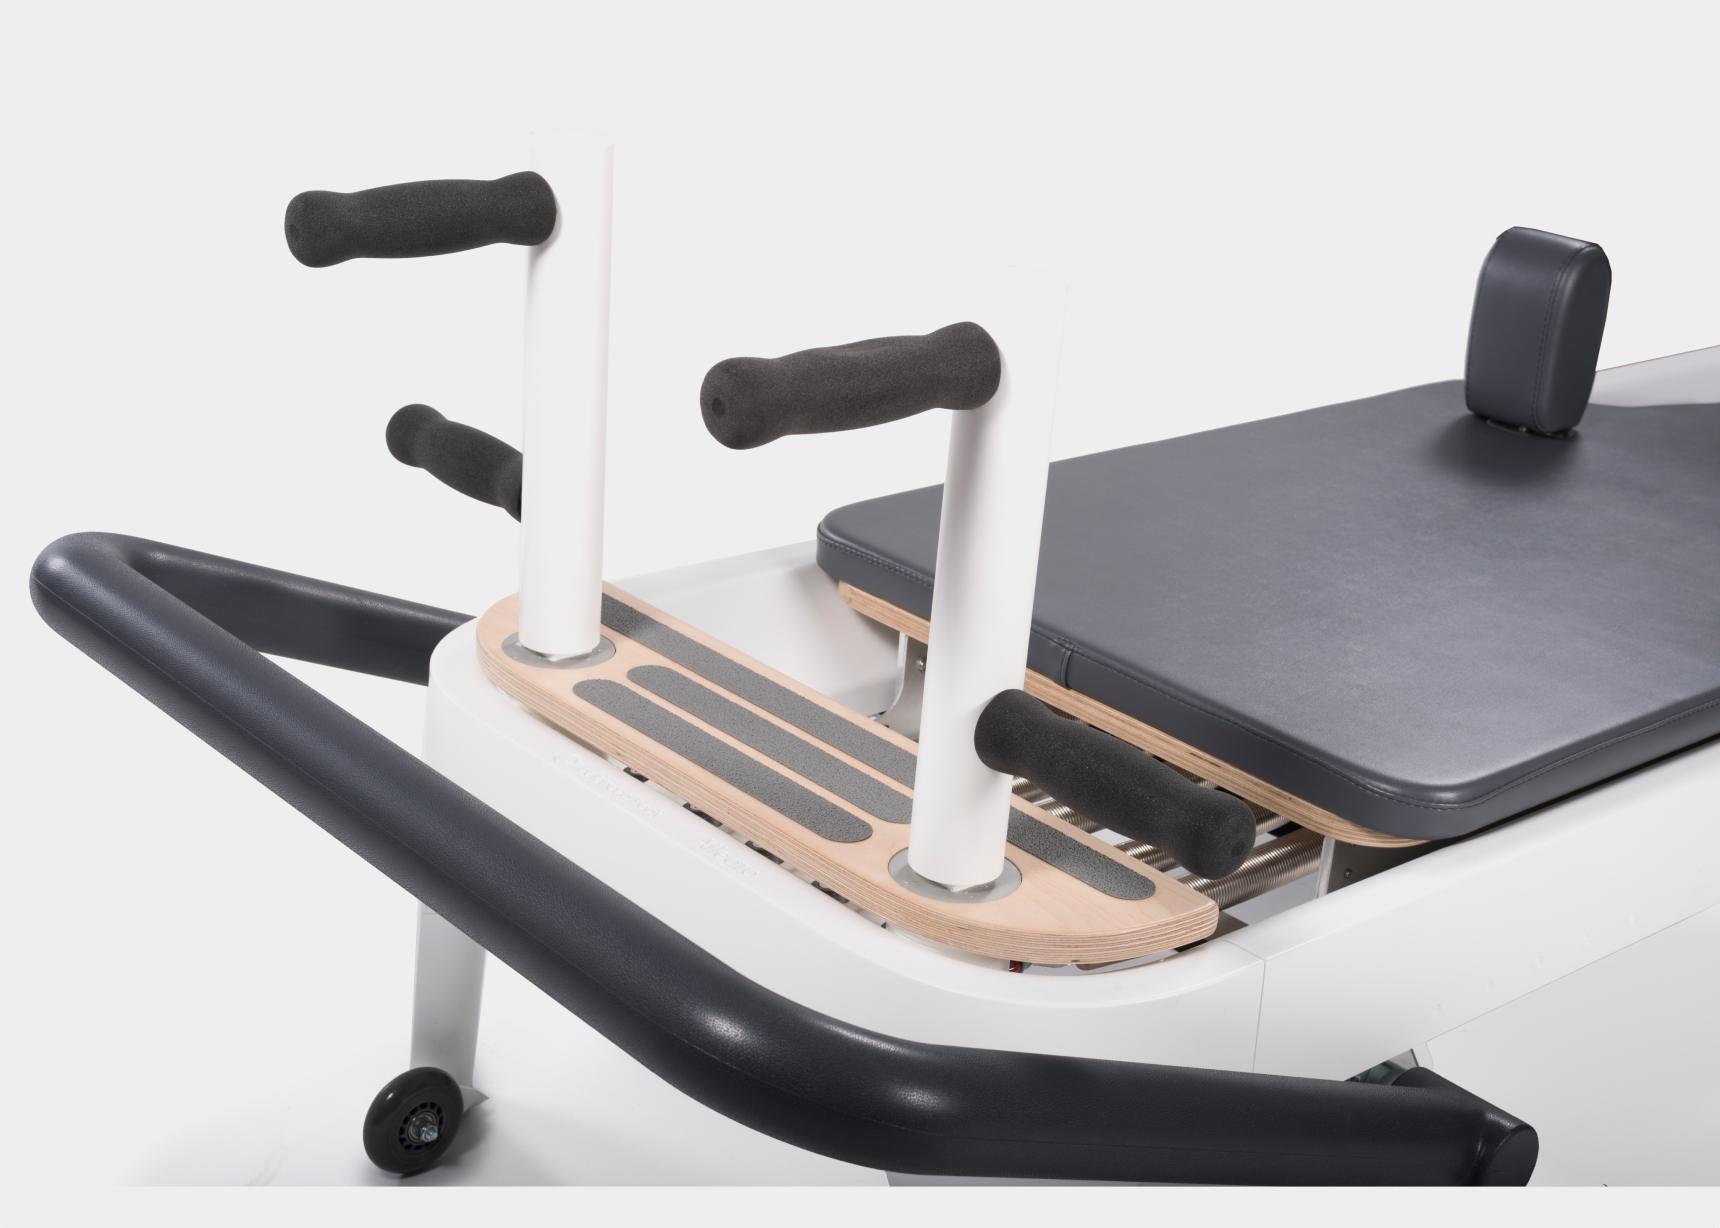 Allegro 2 Reformer plank bars for added workout versatility. 